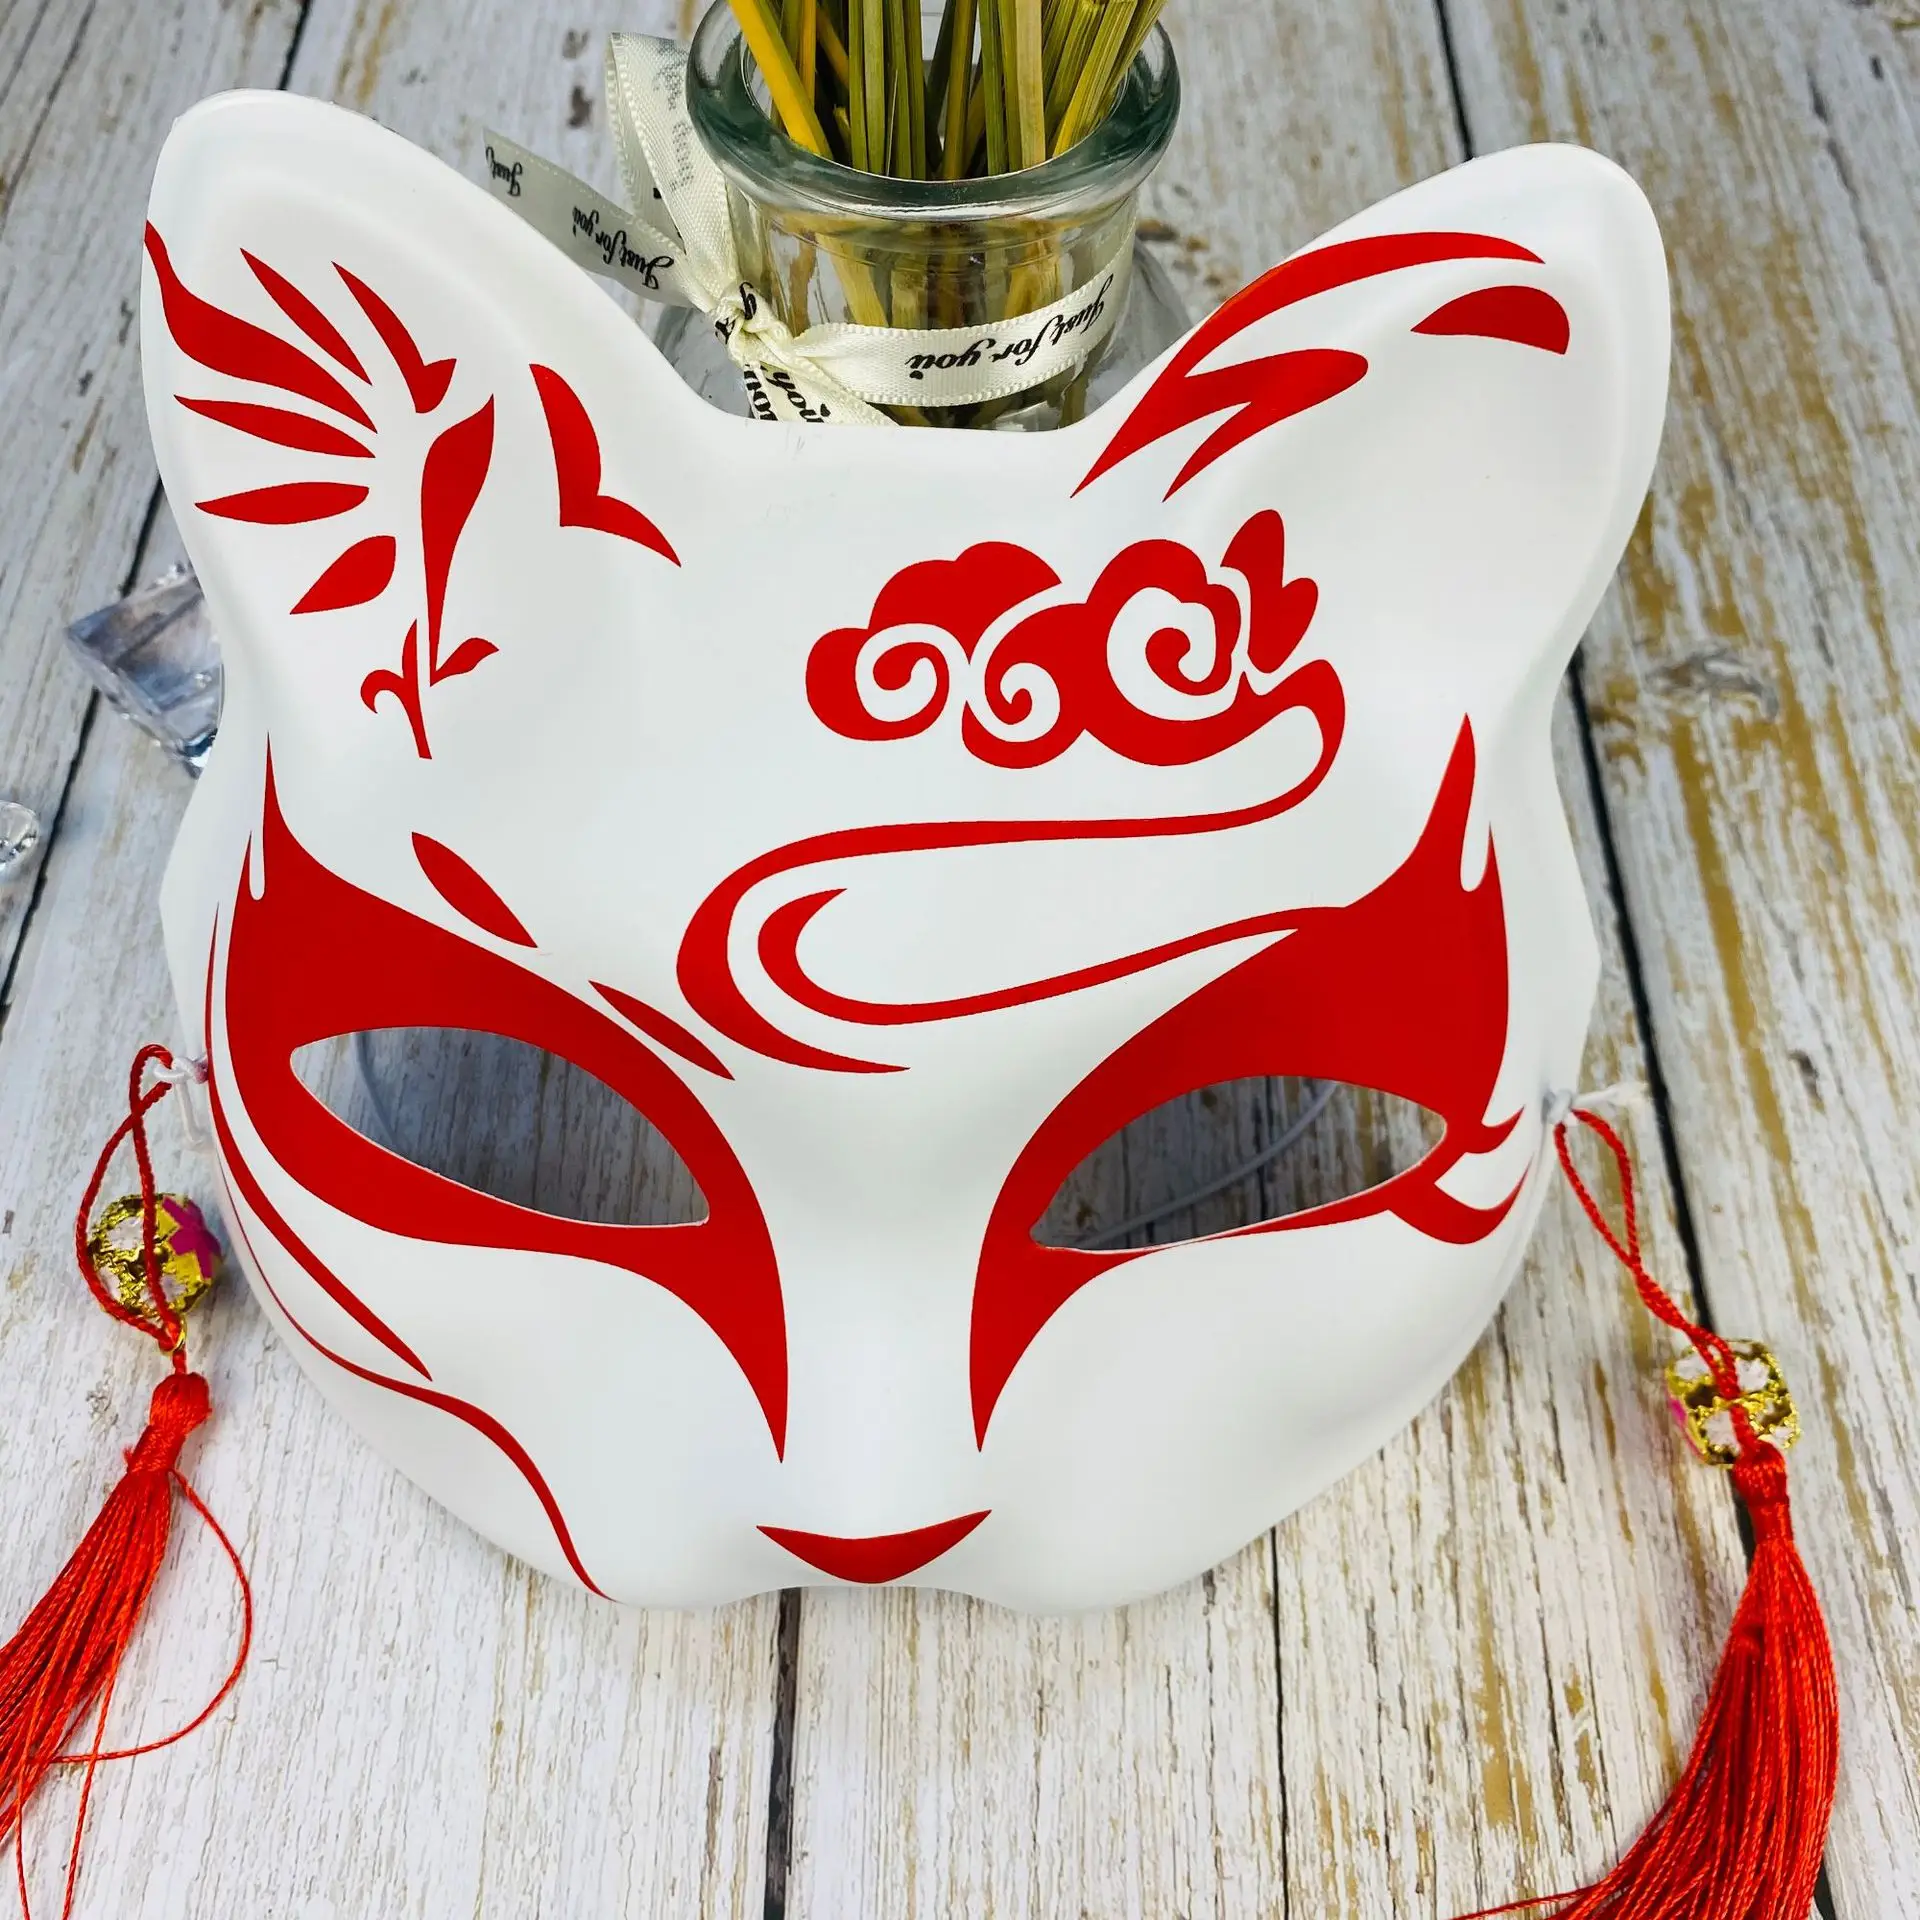 LIQUID Anime Demon Slayer Foxes Mask Hand-painted Japanese Mask Half Face  Mask Festival Ball Kabuki Kitsune Masks Cosplay Prop 